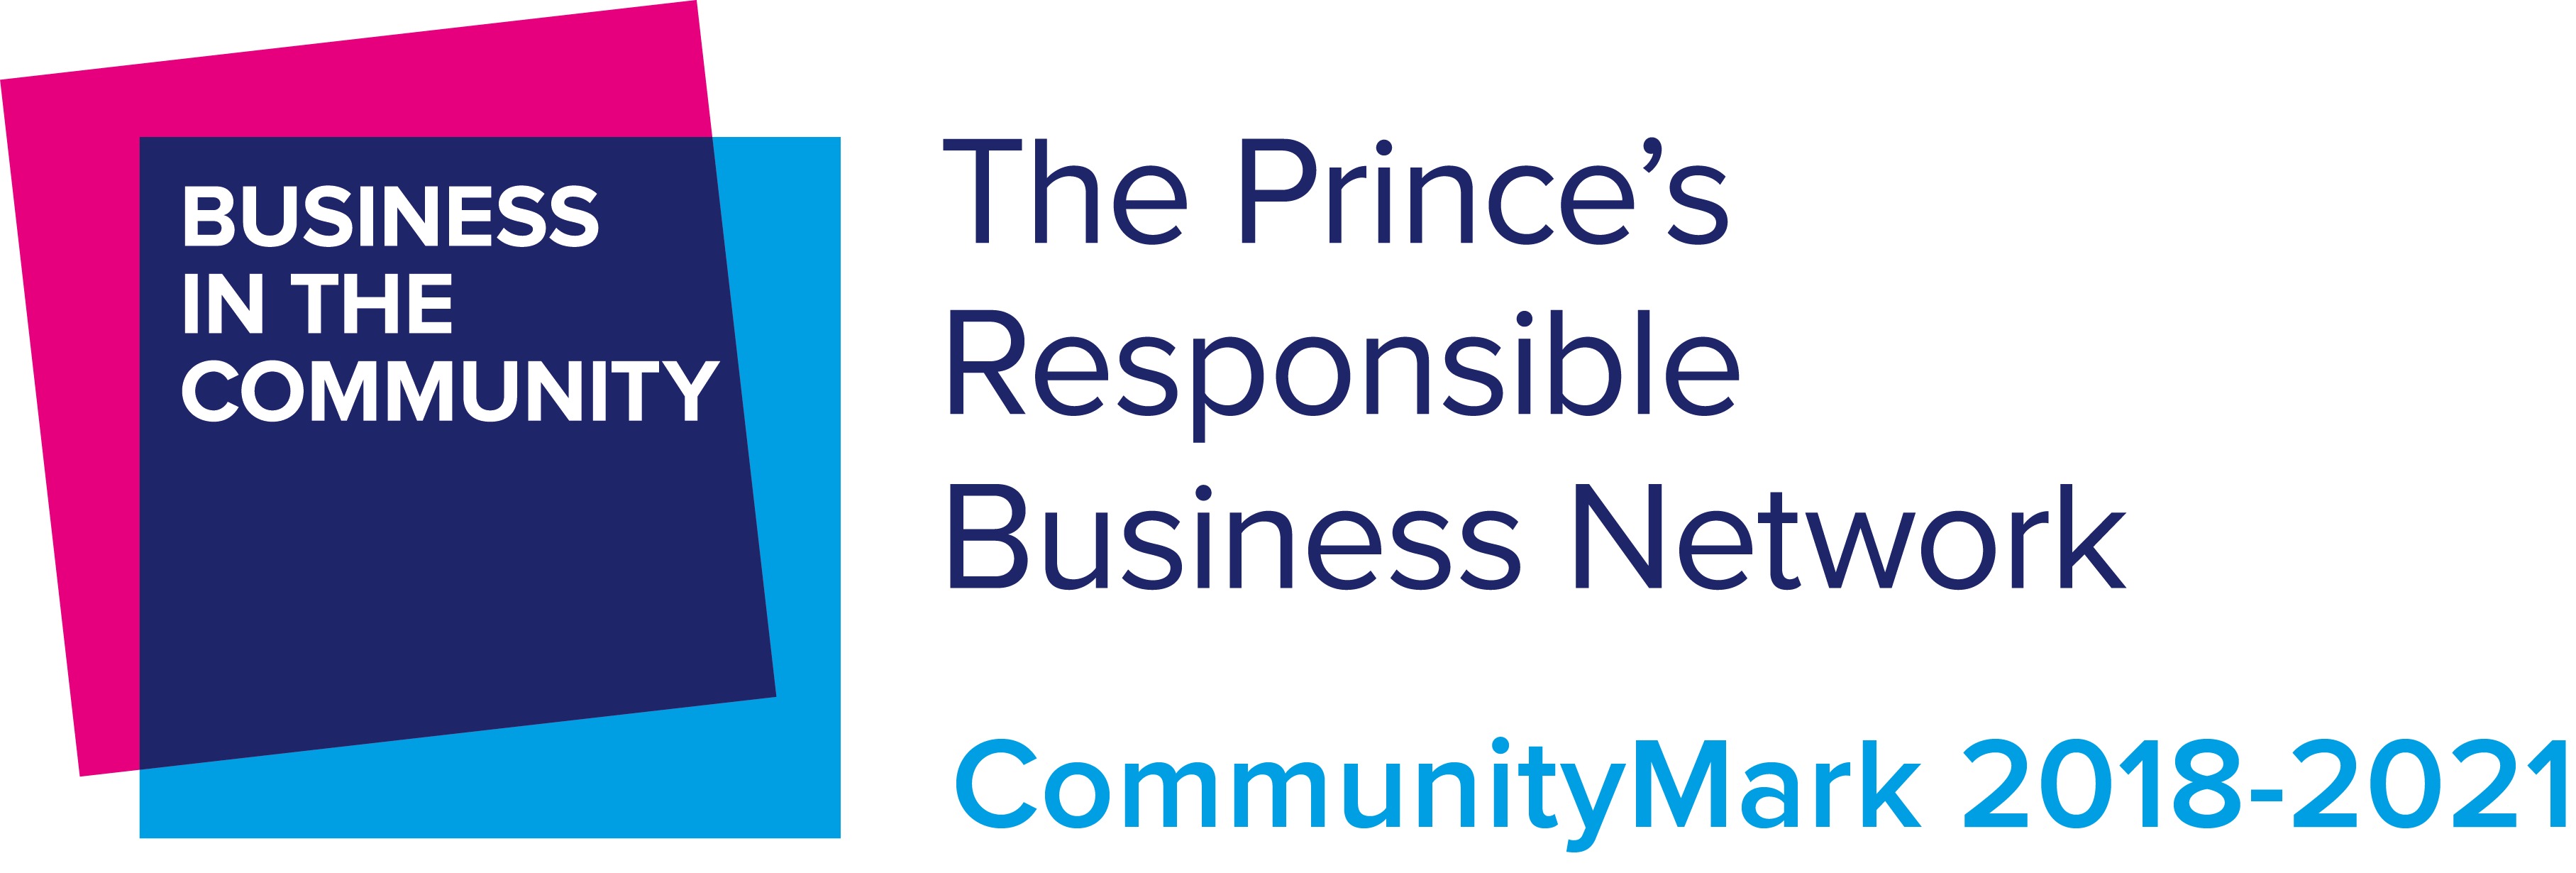 The Prince’s Responsible CommunityMark